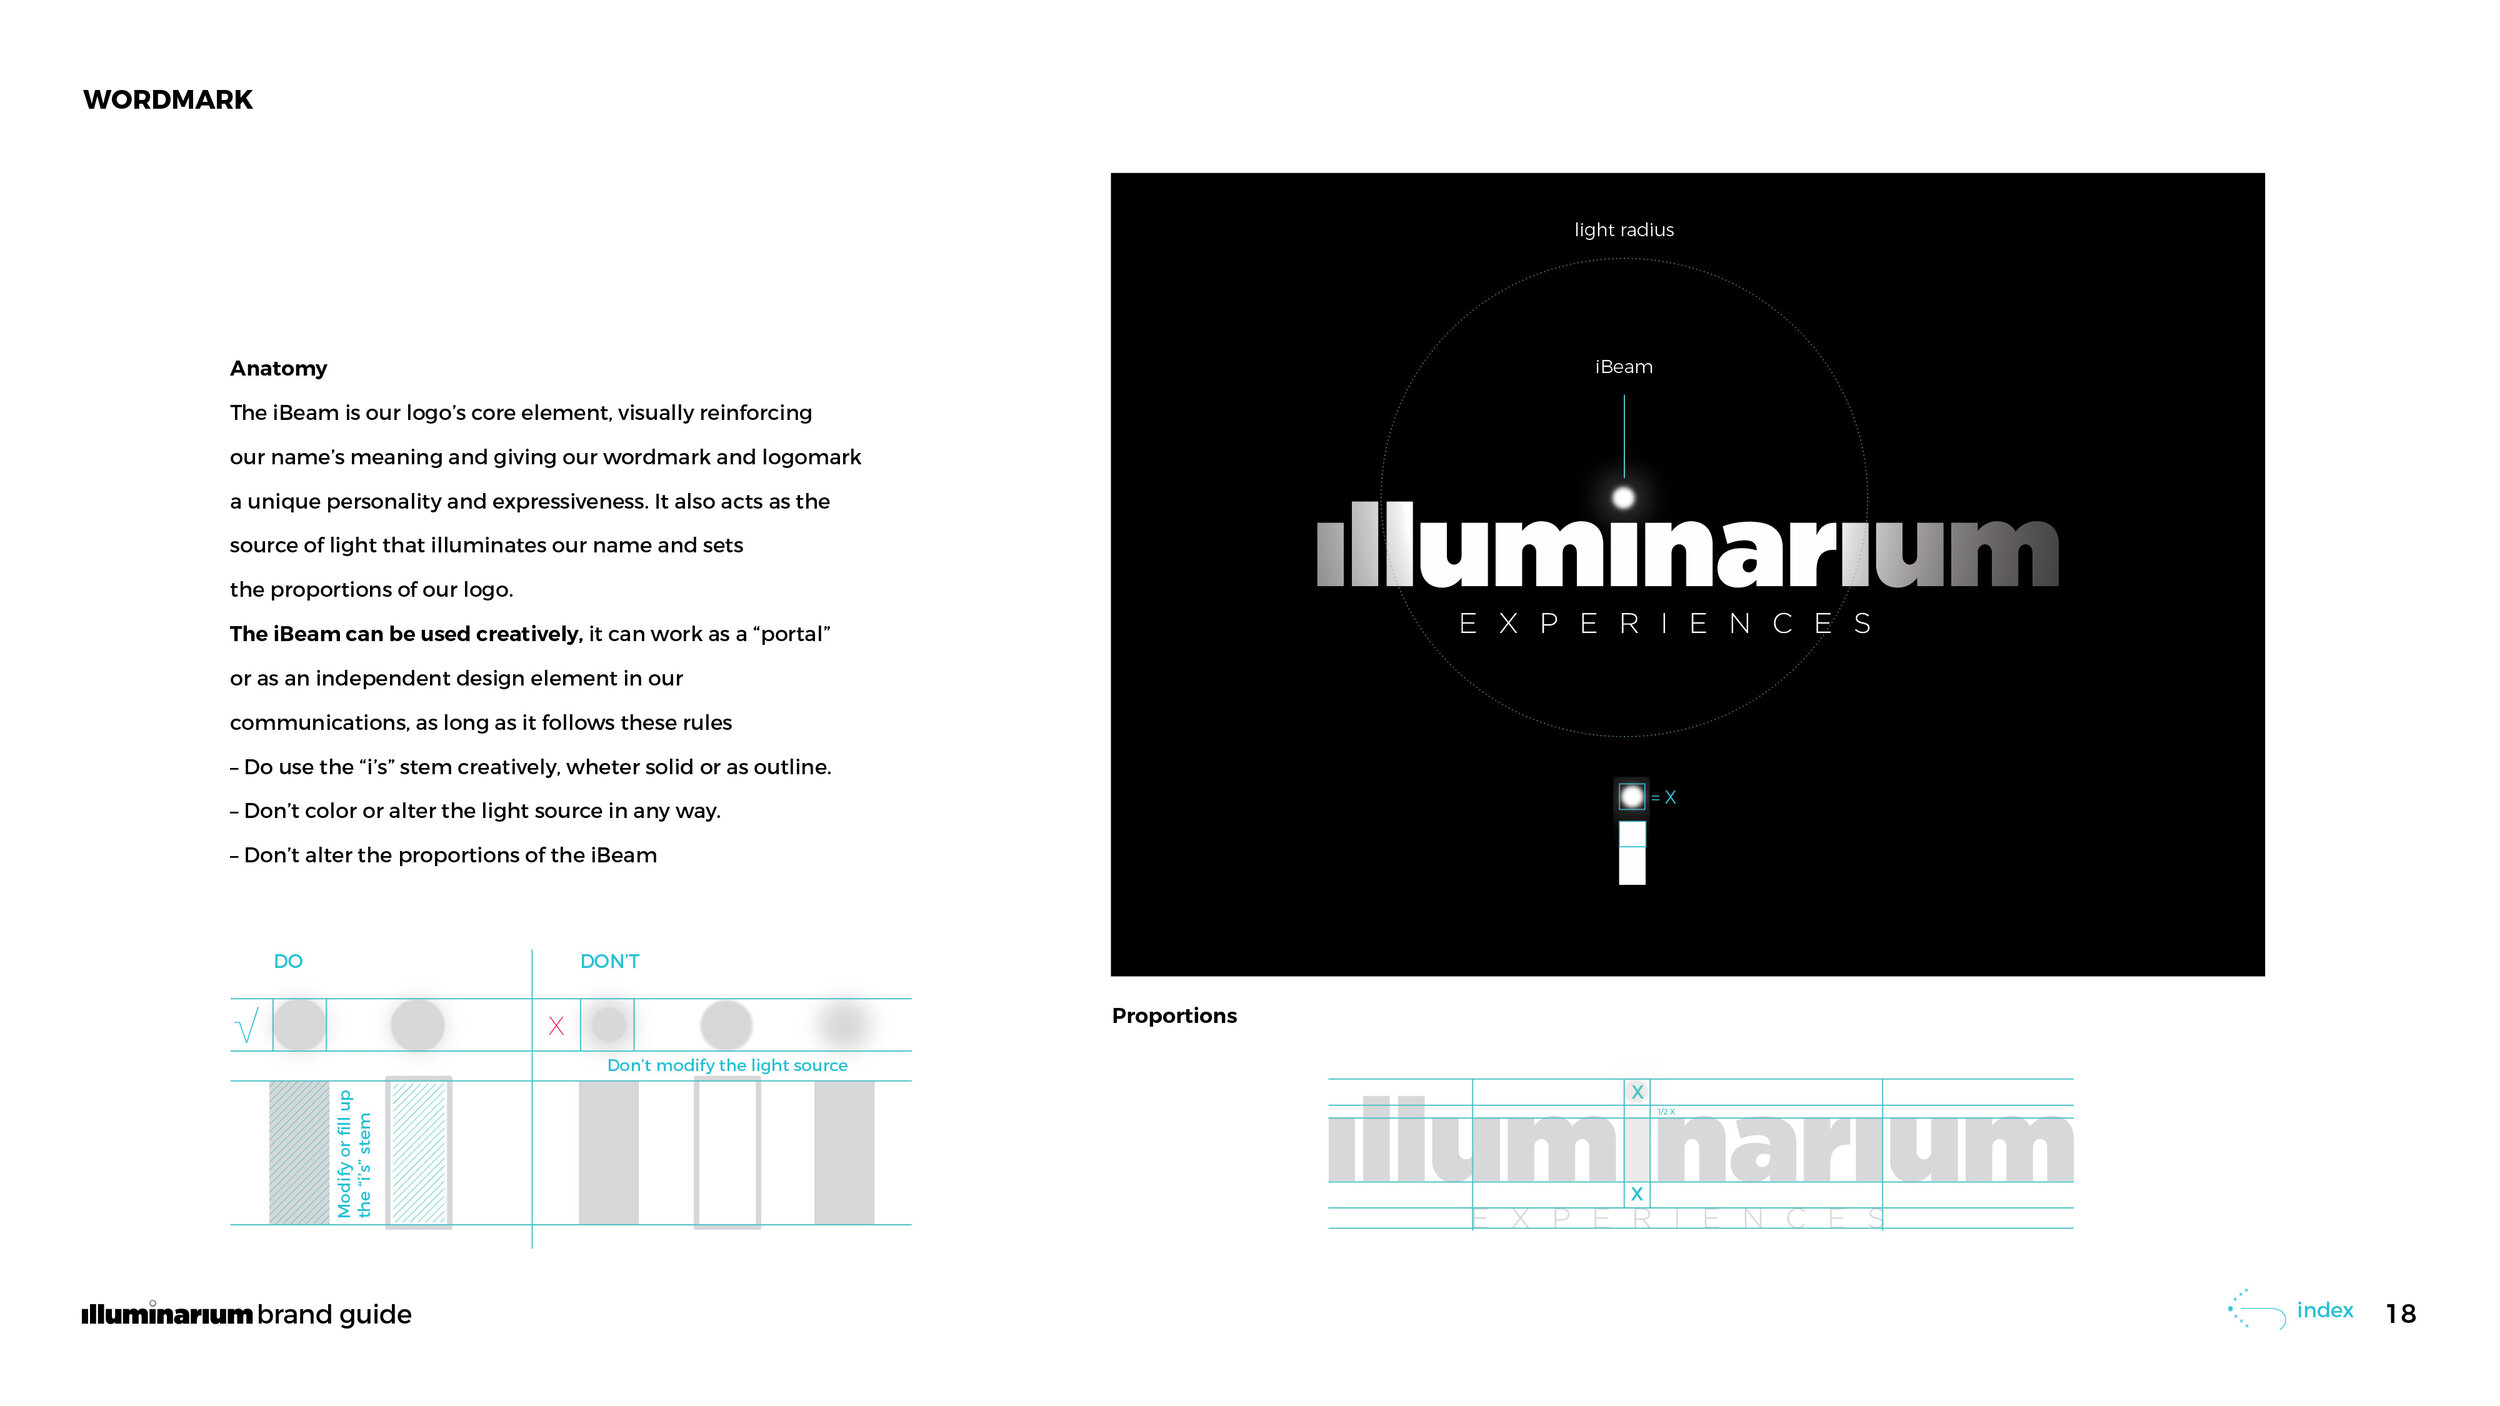 illuminarium_brand guide_16:9_May2020GD_final18.jpg